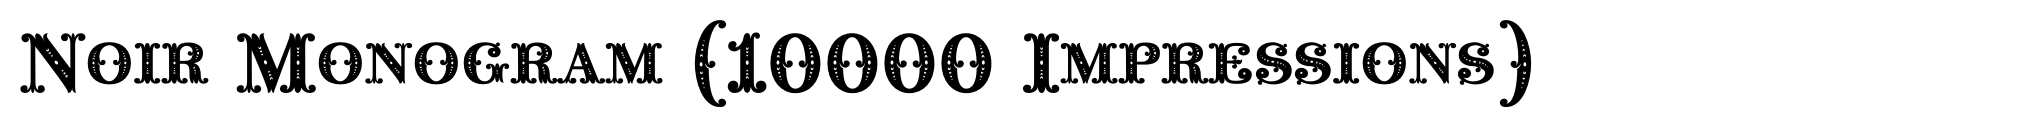 Noir Monogram (10000 Impressions) image